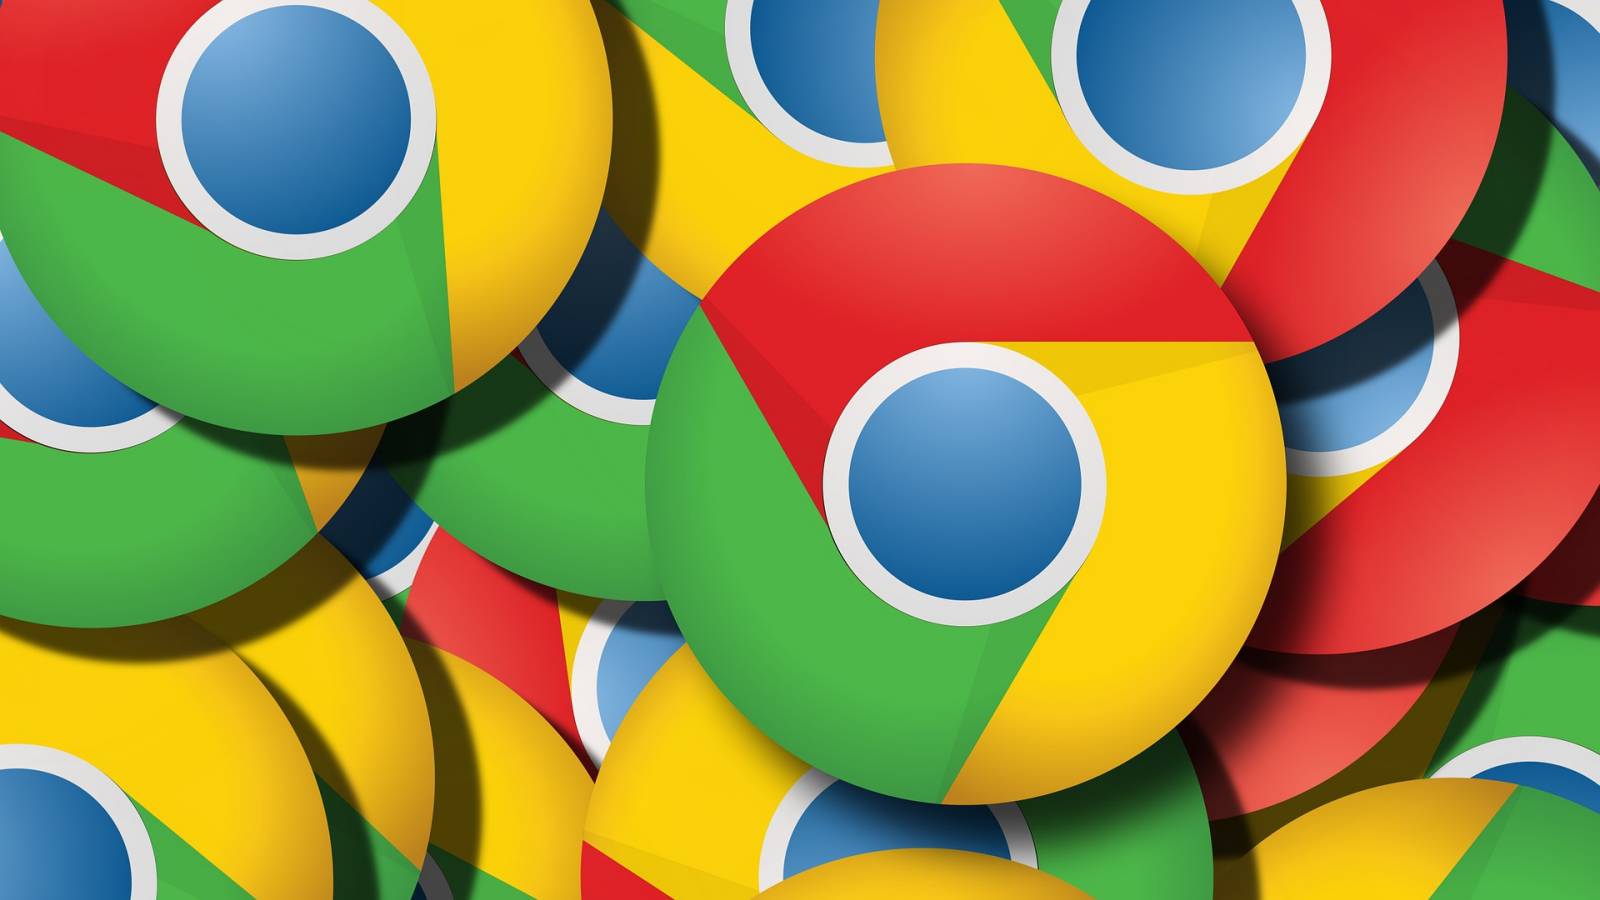 Google Chrome Update af sot Lansat, Schimbarile Oferite in Telefoane